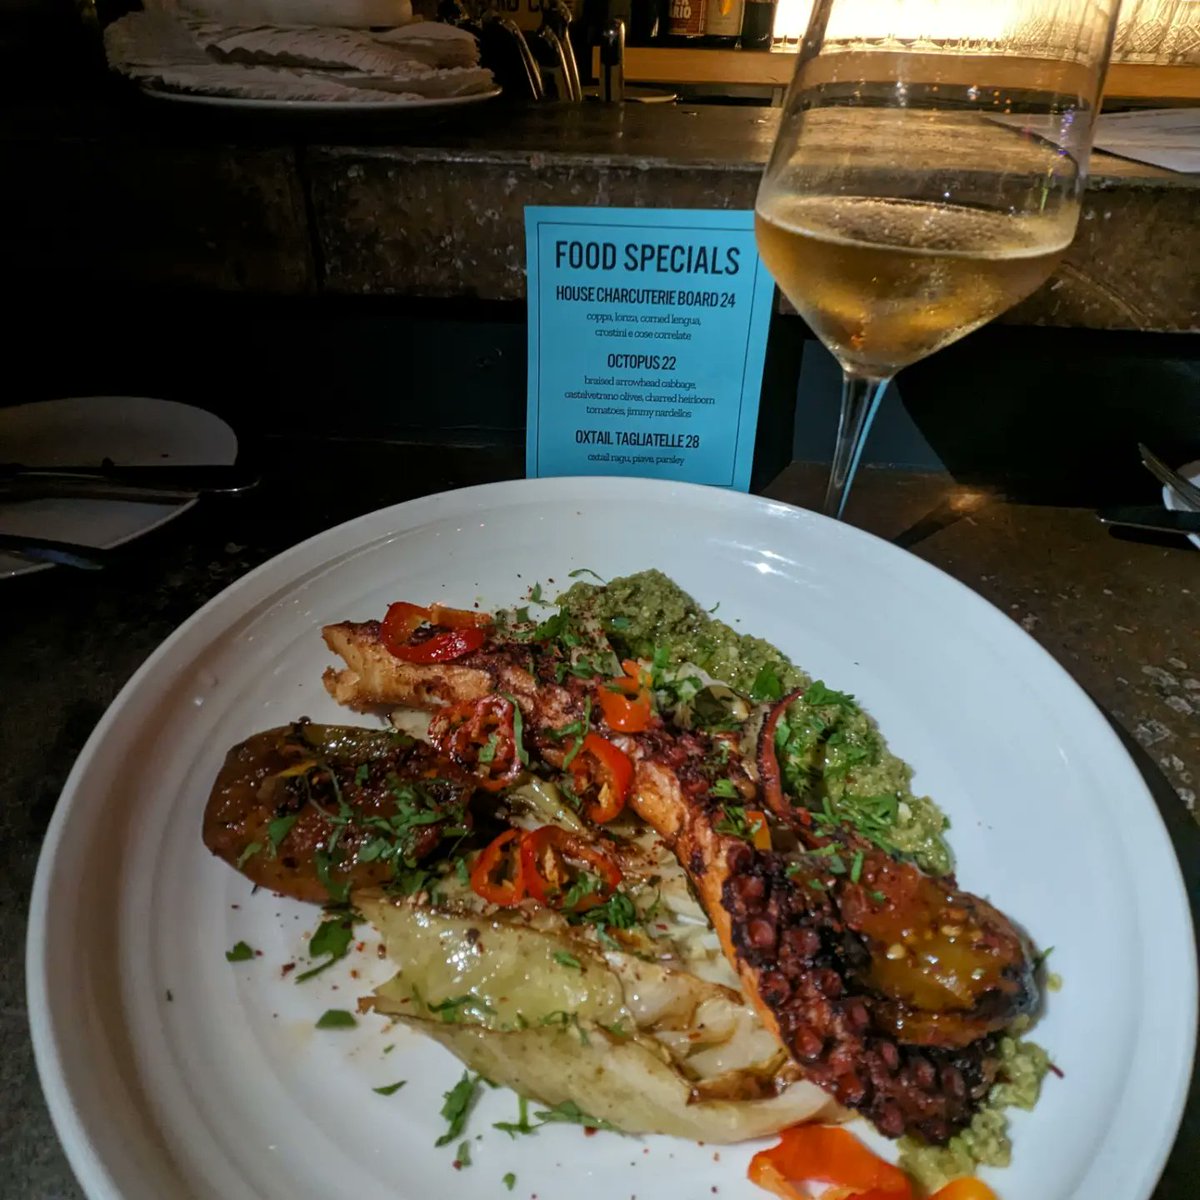 My thoughts on #dinner @vialecambridge. Spoiler alert, I loved it. #Boston #Cambridge #BestOfBoston #Restaurants m.facebook.com/story.php?stor…